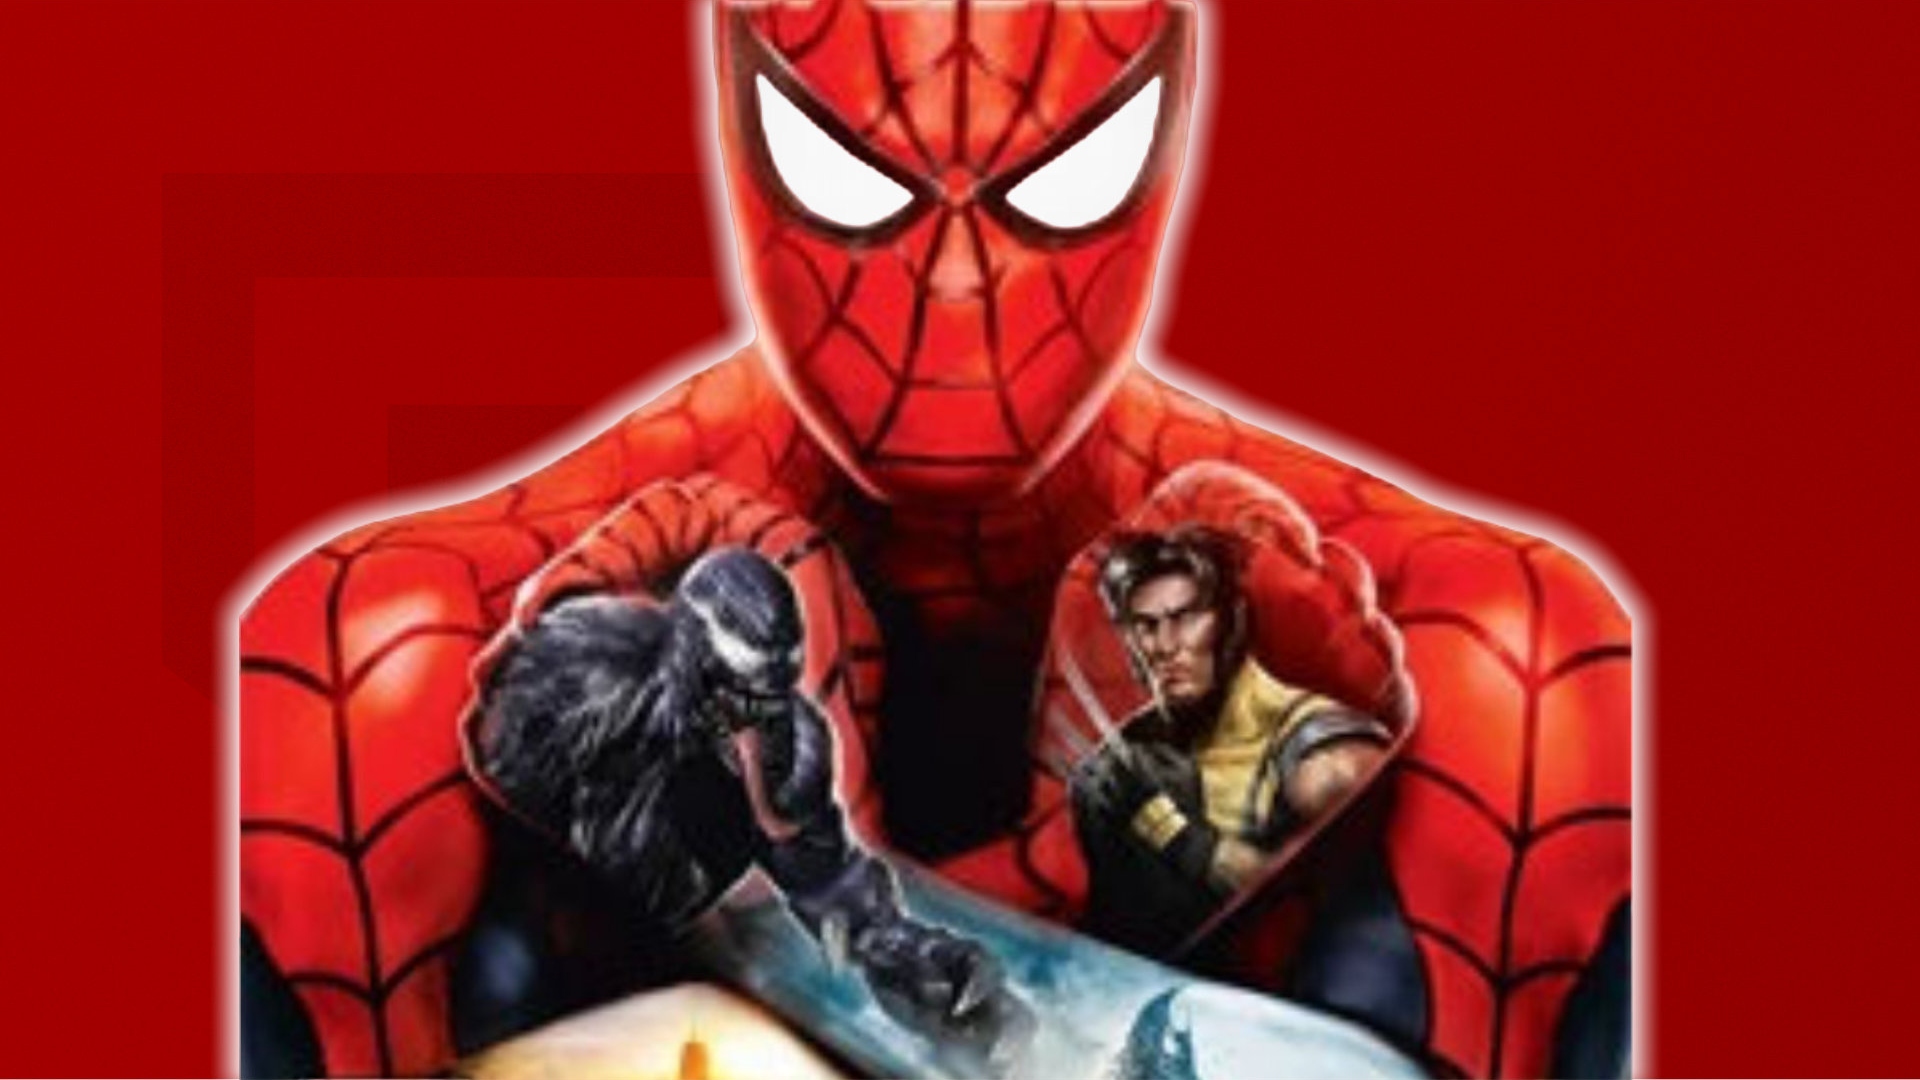 Spider-Man - Web of Shadows (USA) ISO < PSP ISOs